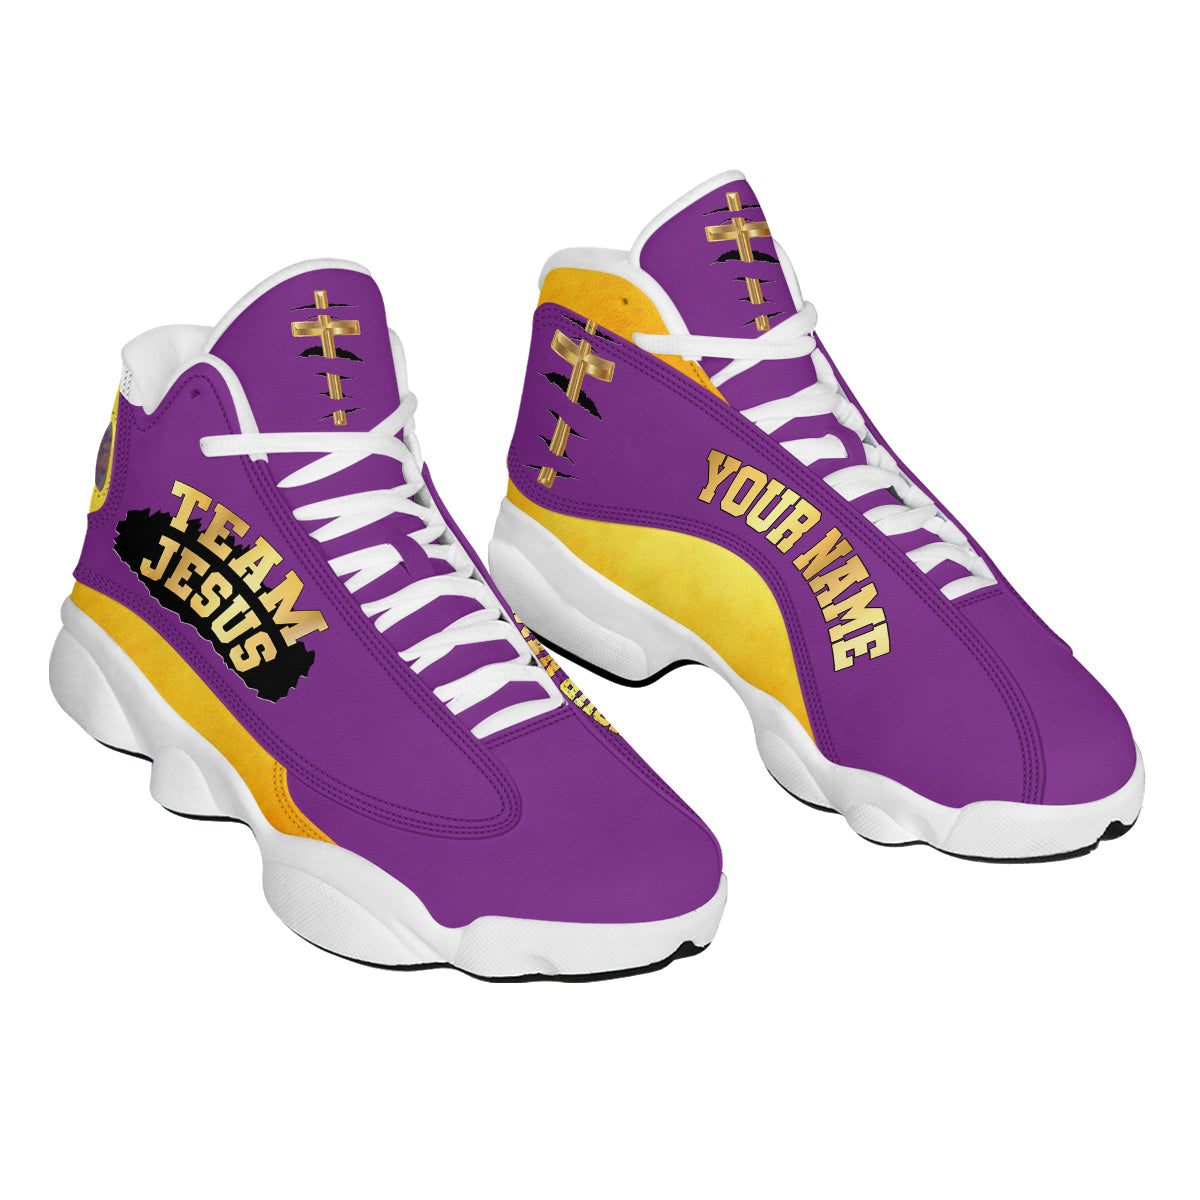 Team Jesus Personalized Purple Jesus Basketball Shoes For Men Women - Christian Shoes - Jesus Shoes - Unisex Basketball Shoes